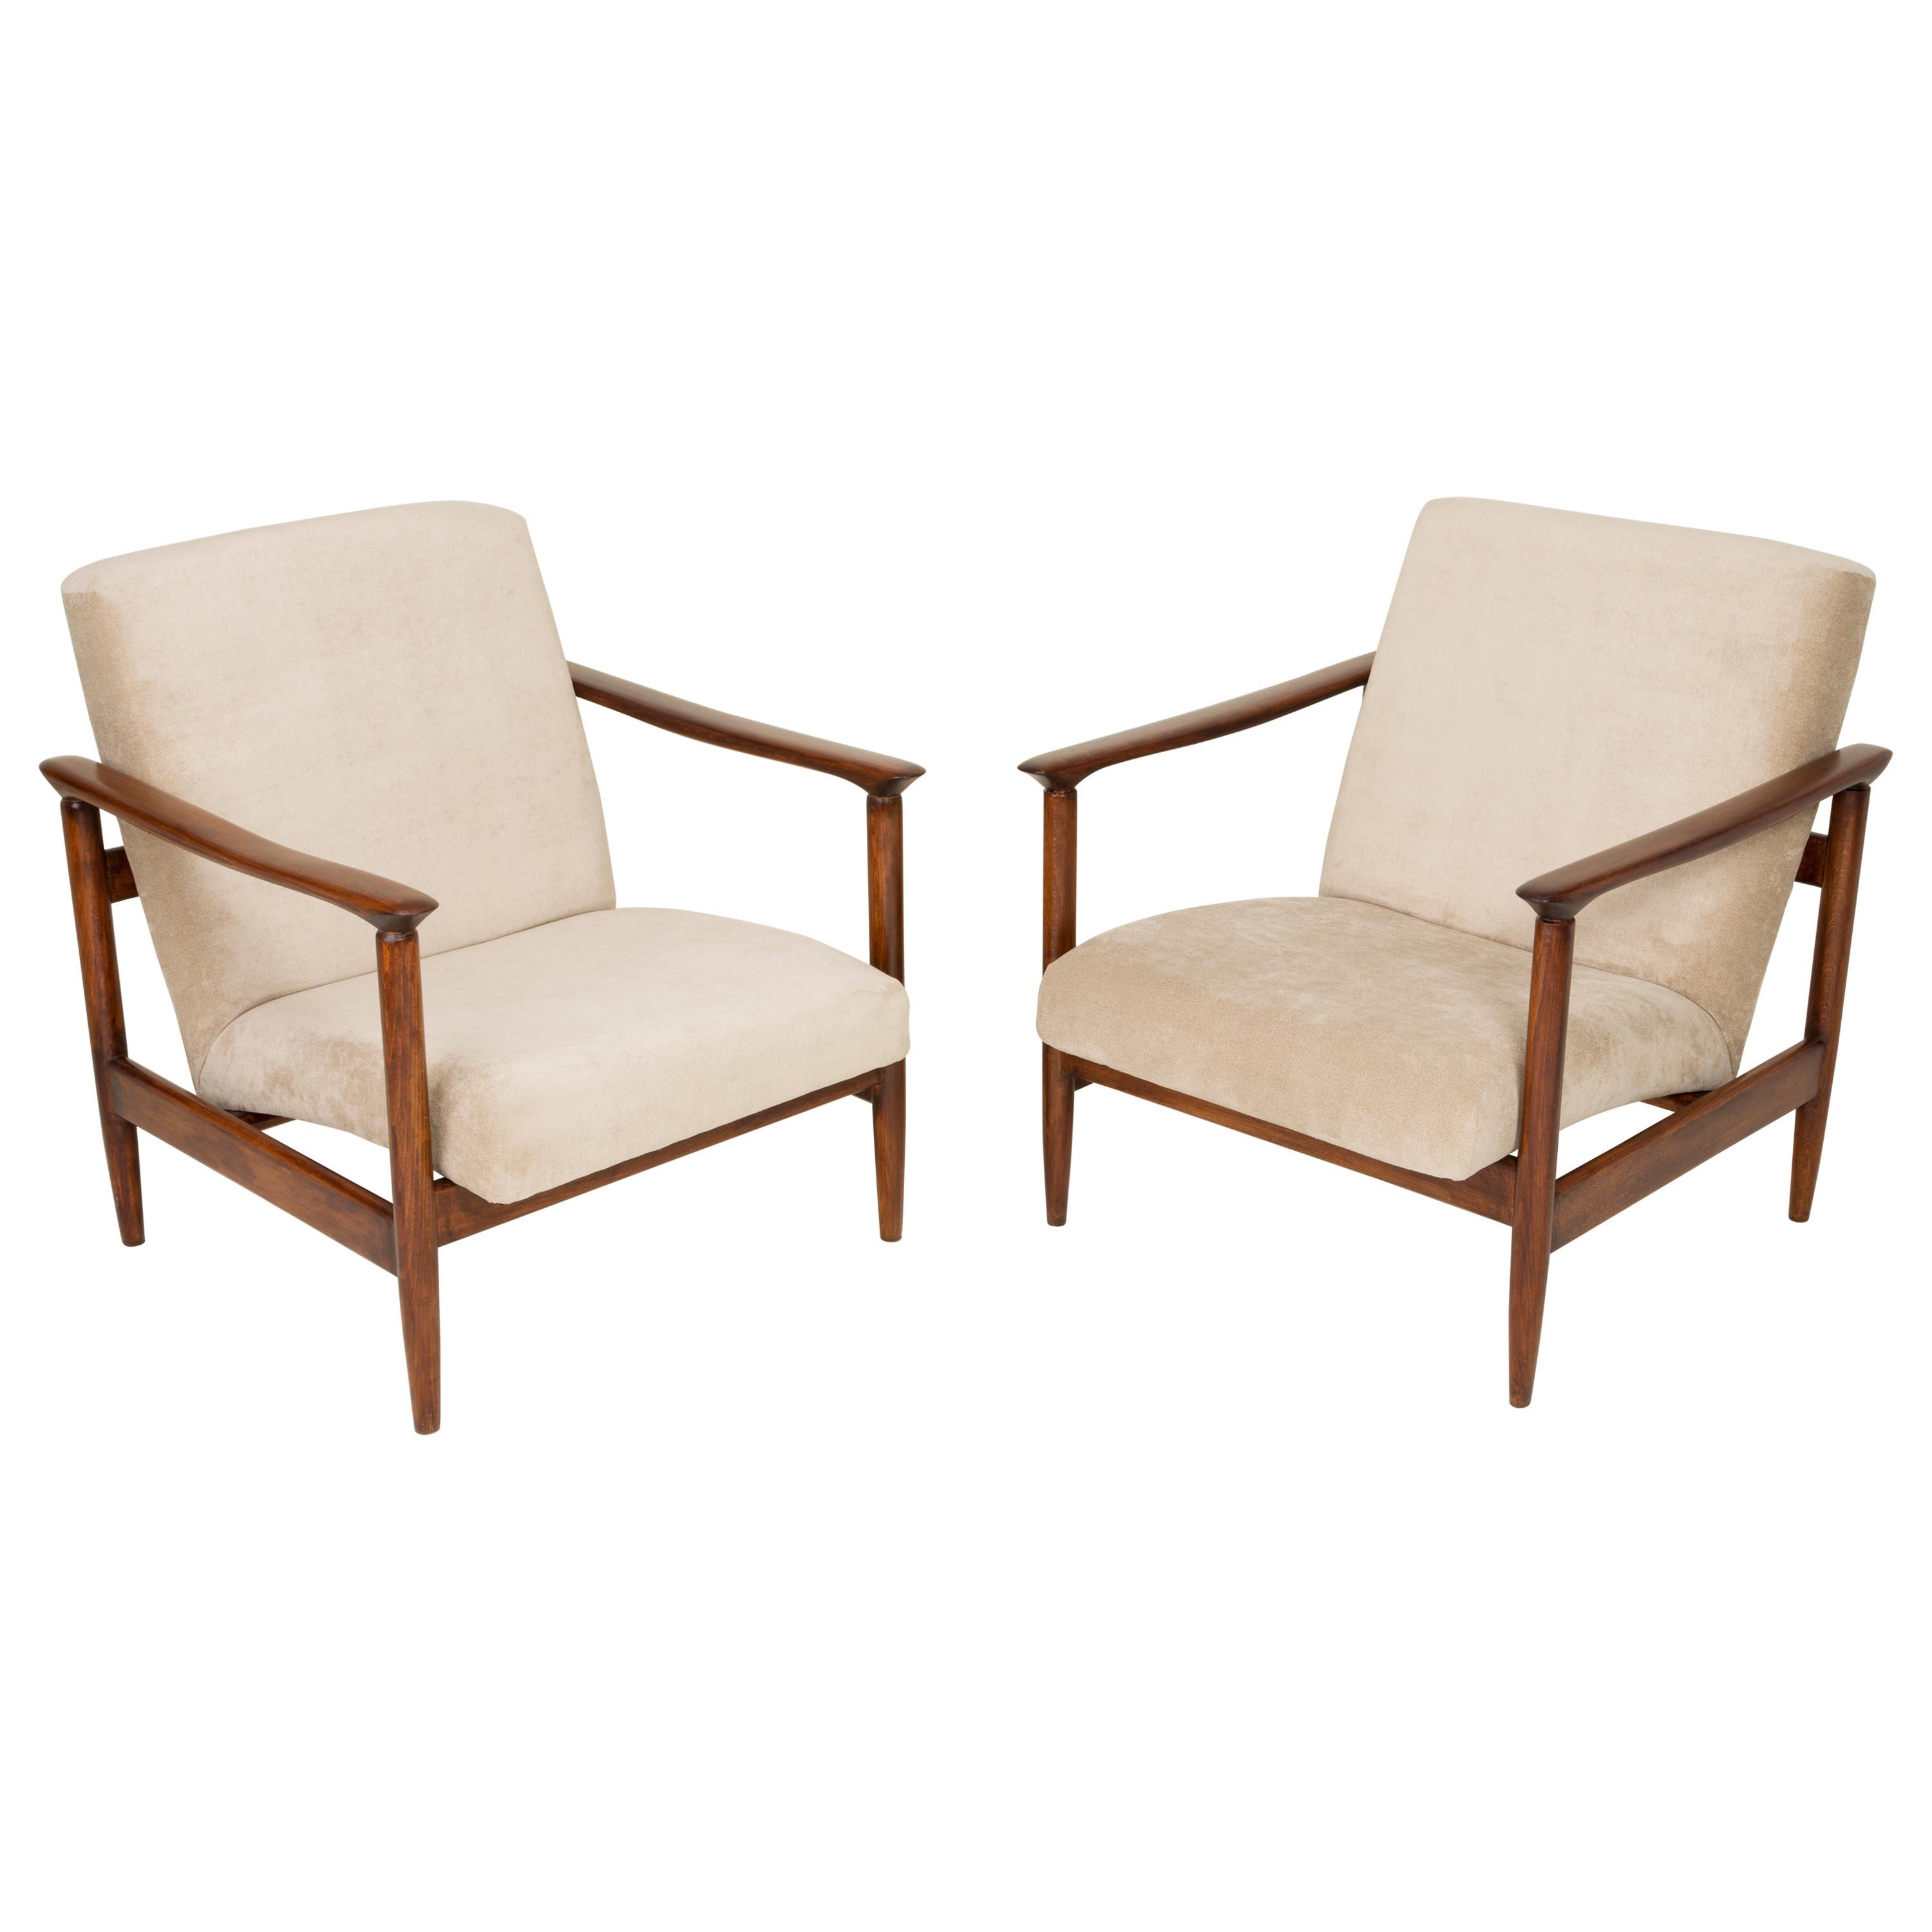 Paar beigefarbene Sessel, Edmund Homa, GFM-142, 1960er Jahre, Polen